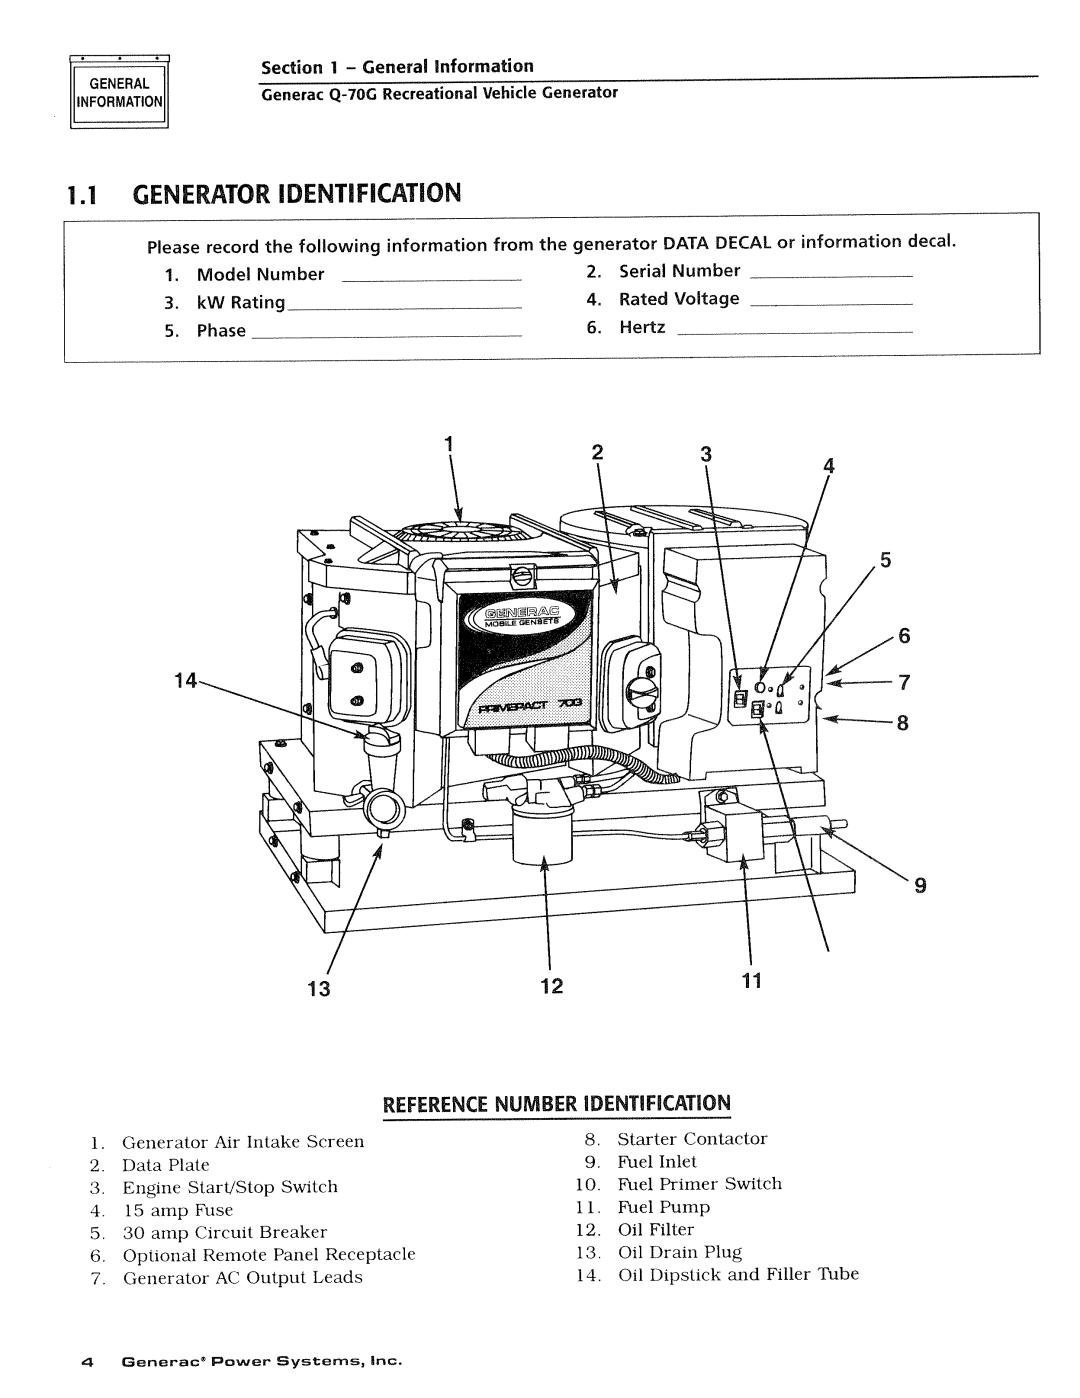 Generac Power Systems 0784-1 manual 